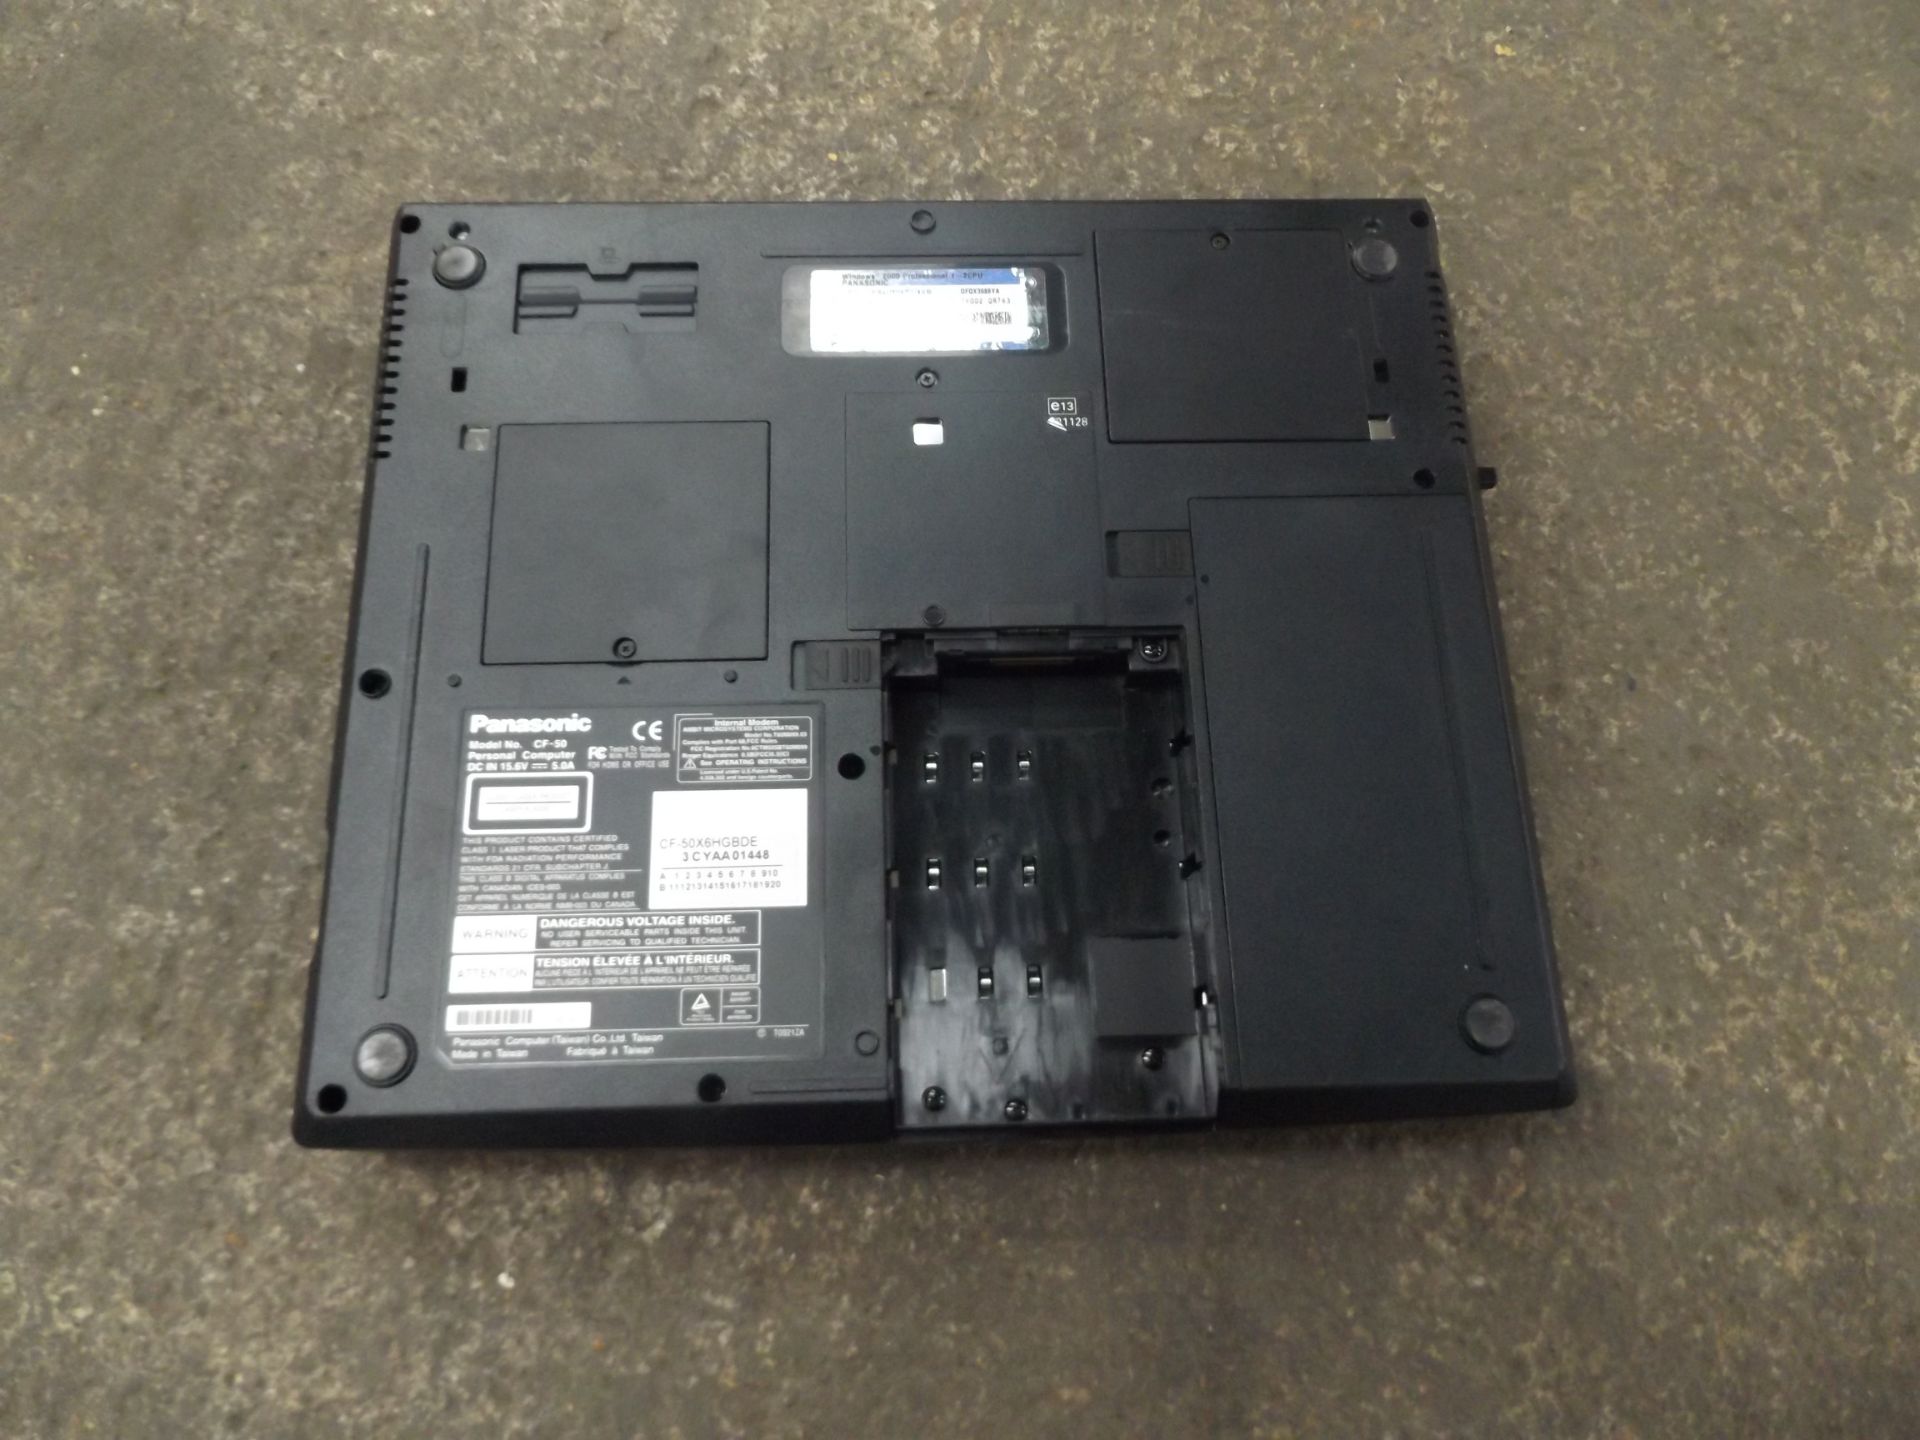 5 x Panasonic CF-50 Toughbook Laptops - Image 8 of 10